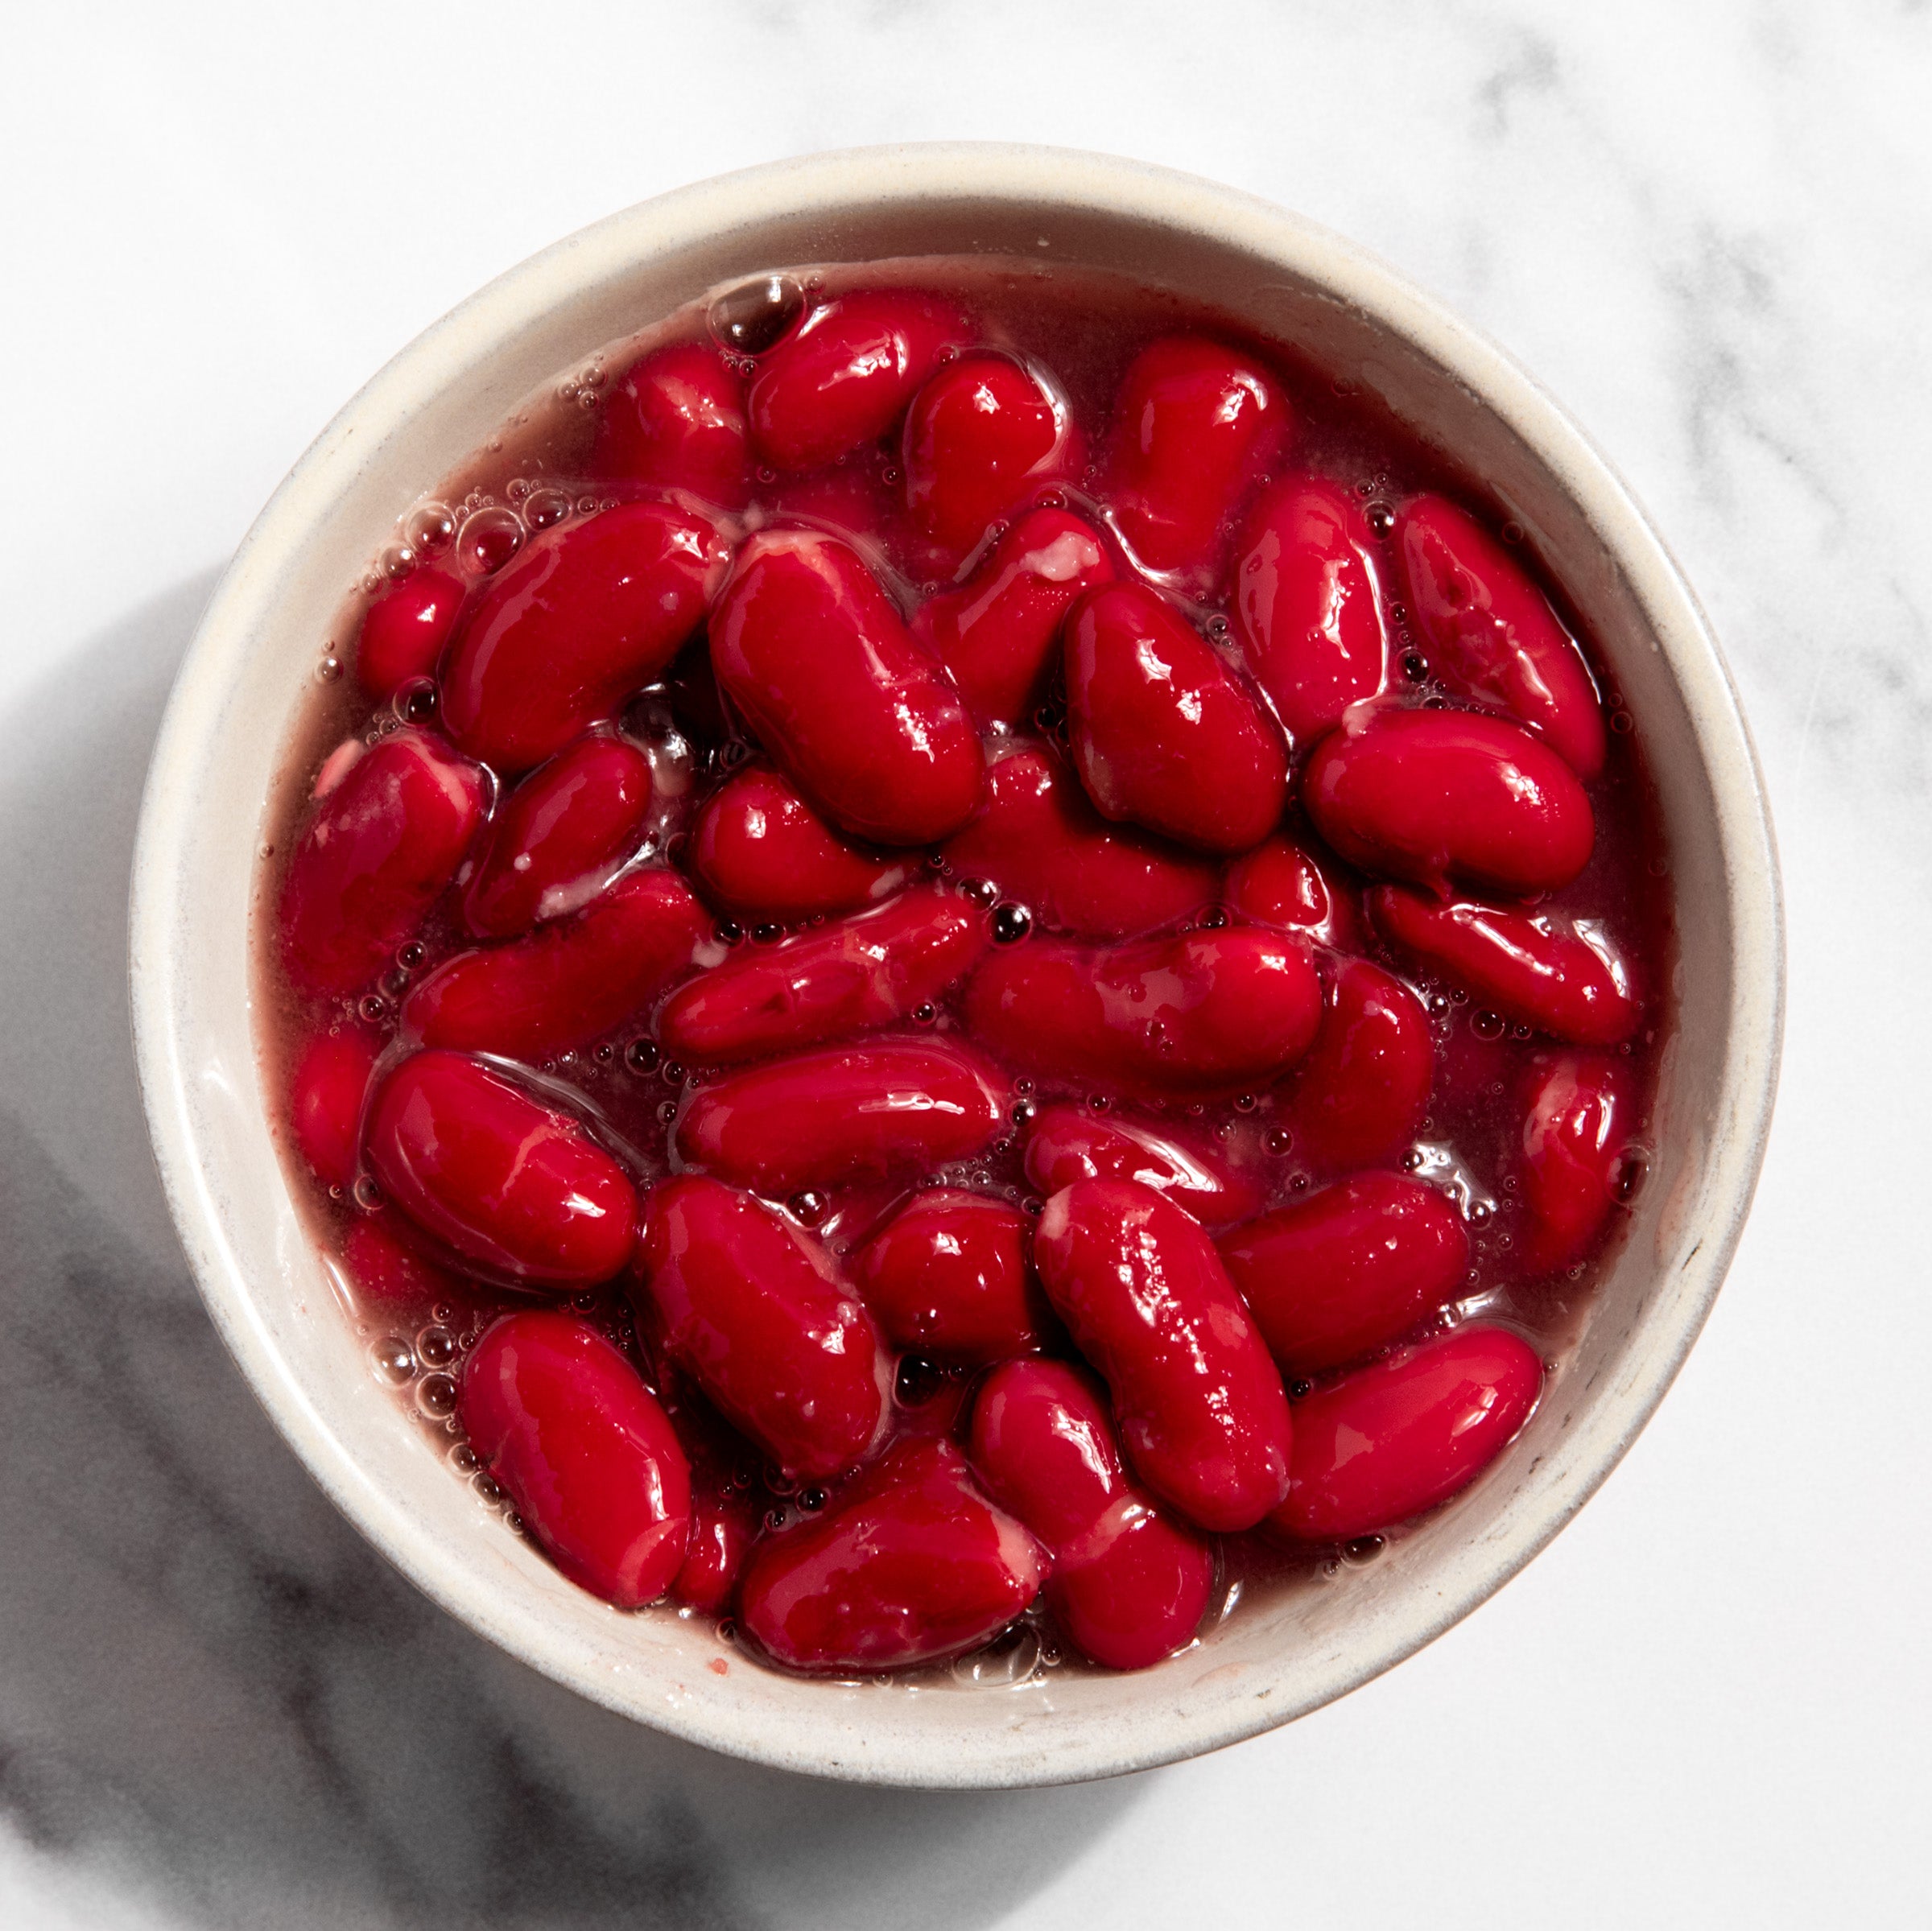 igourmet_15584_Spanish Red Kidney Beans_Luengo_Rice, Beans & Grains